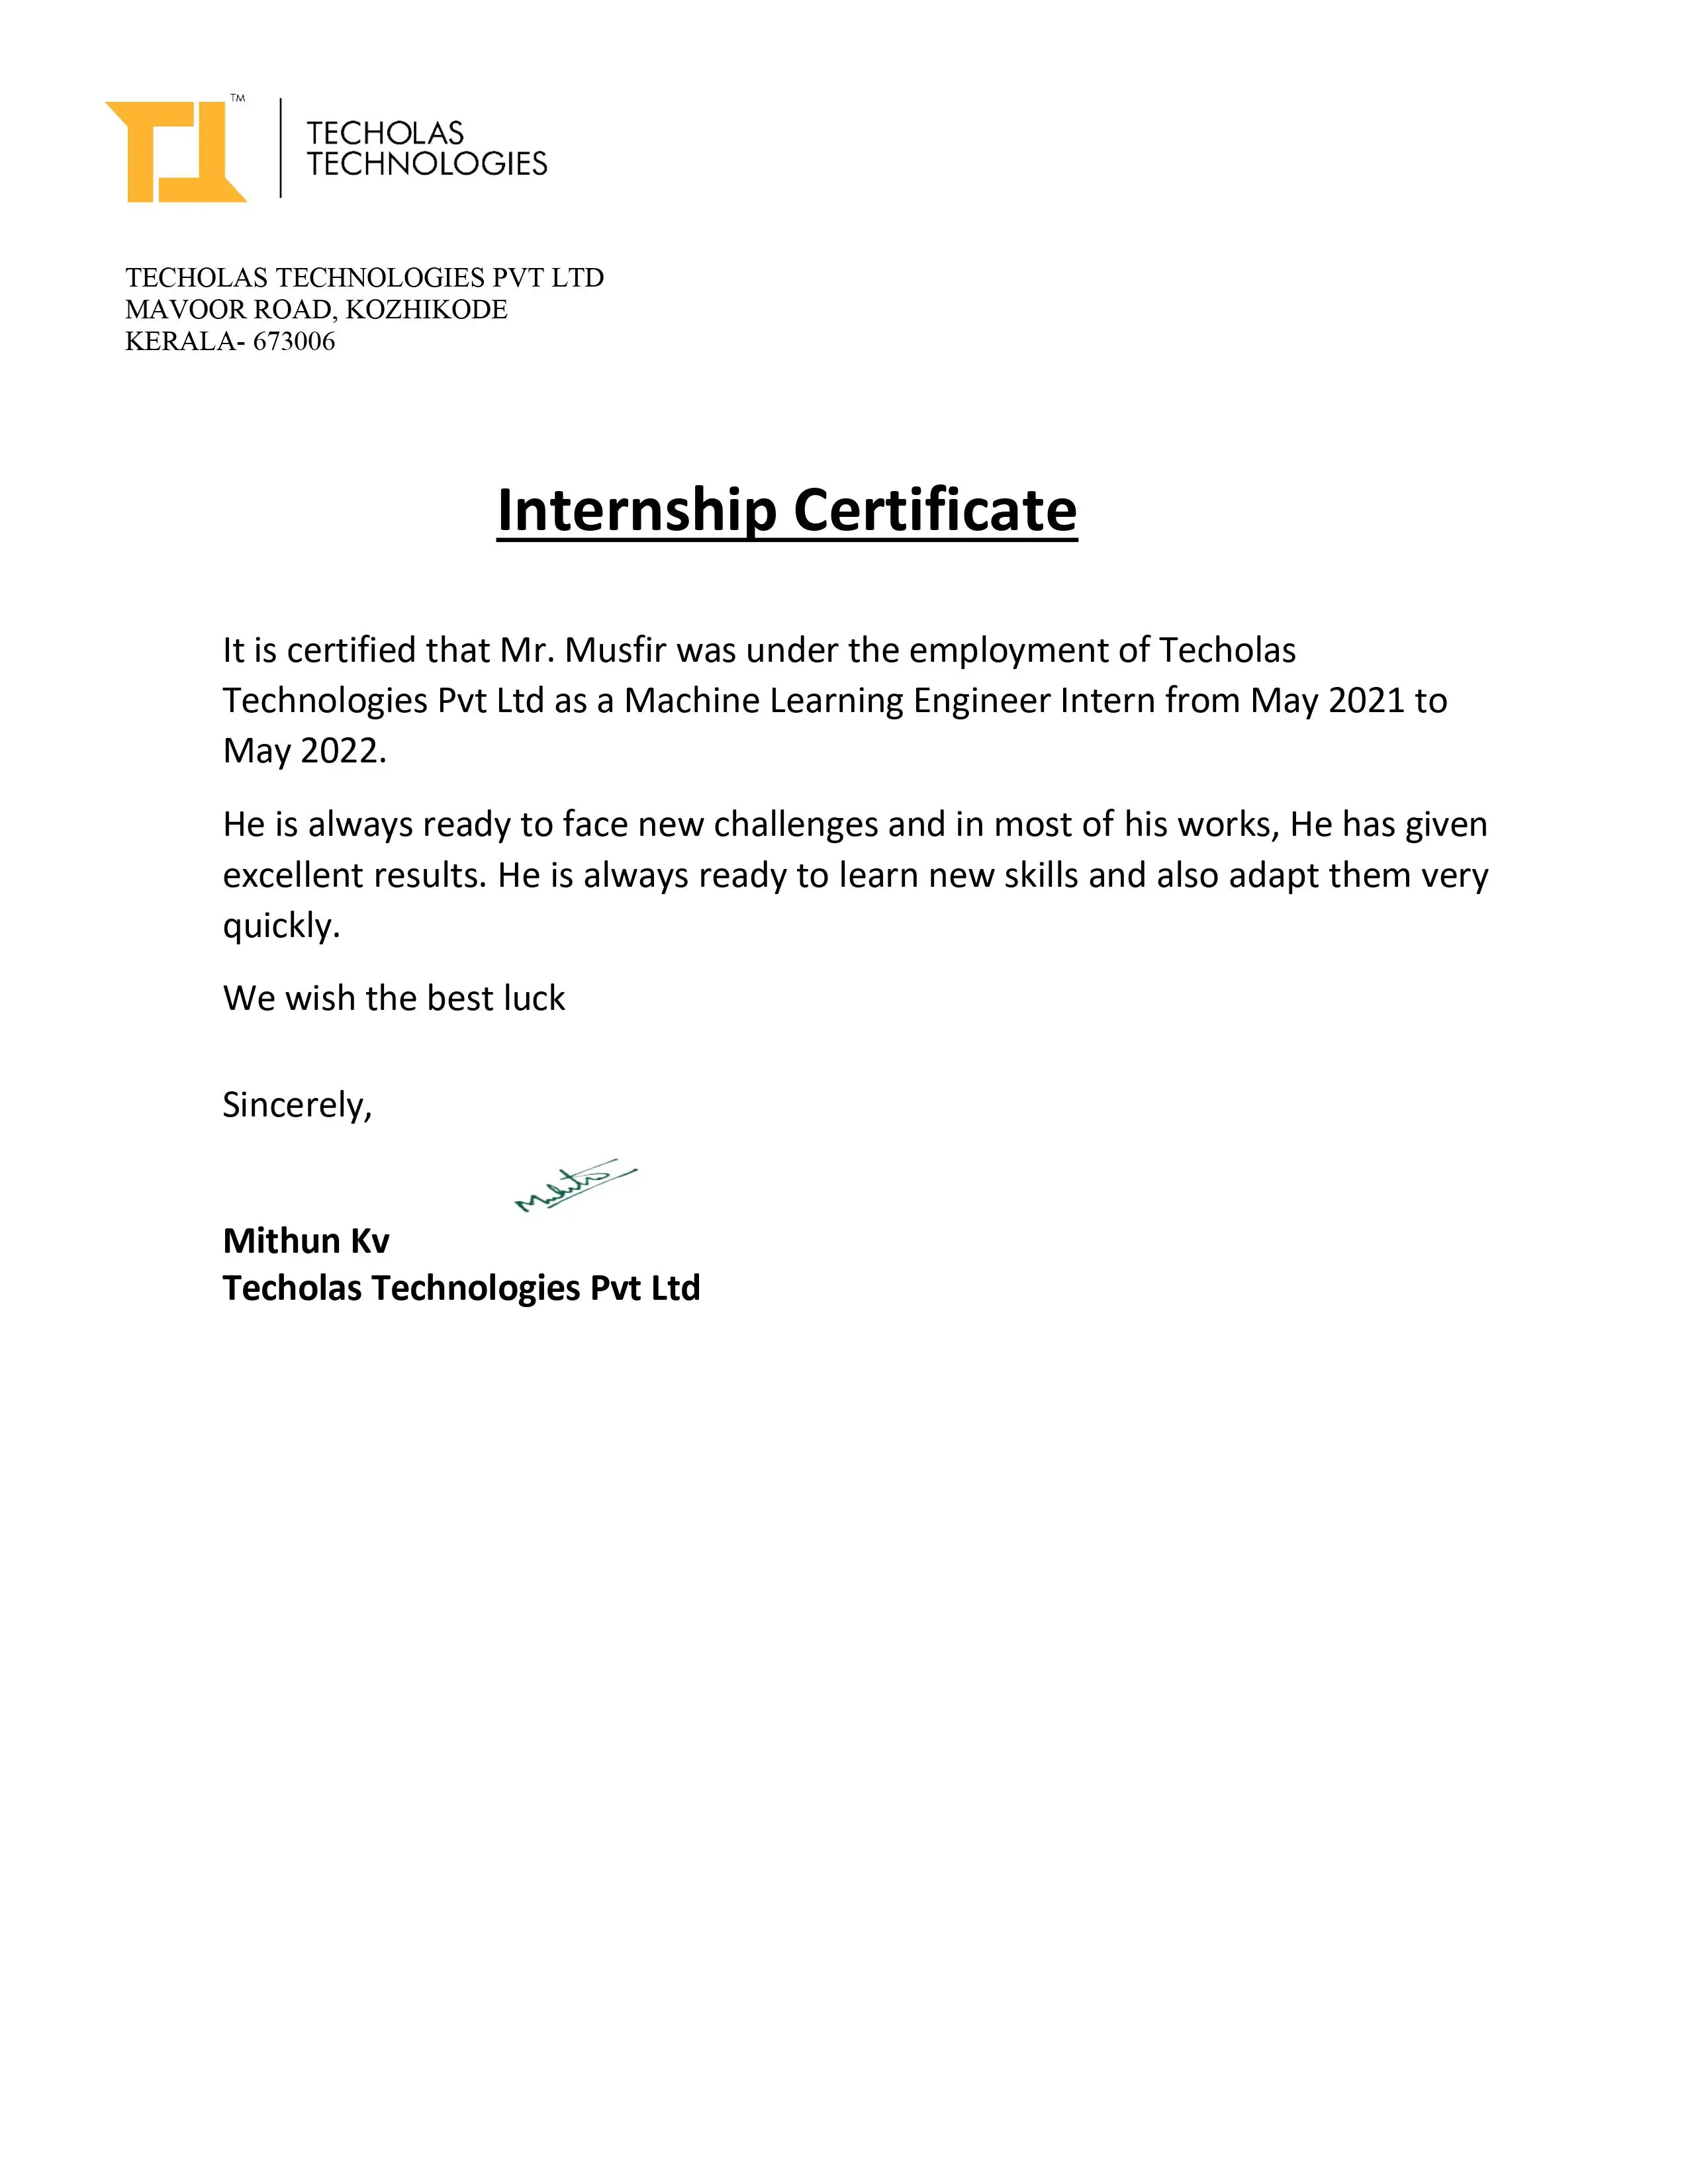 Techolas Internship Certificate